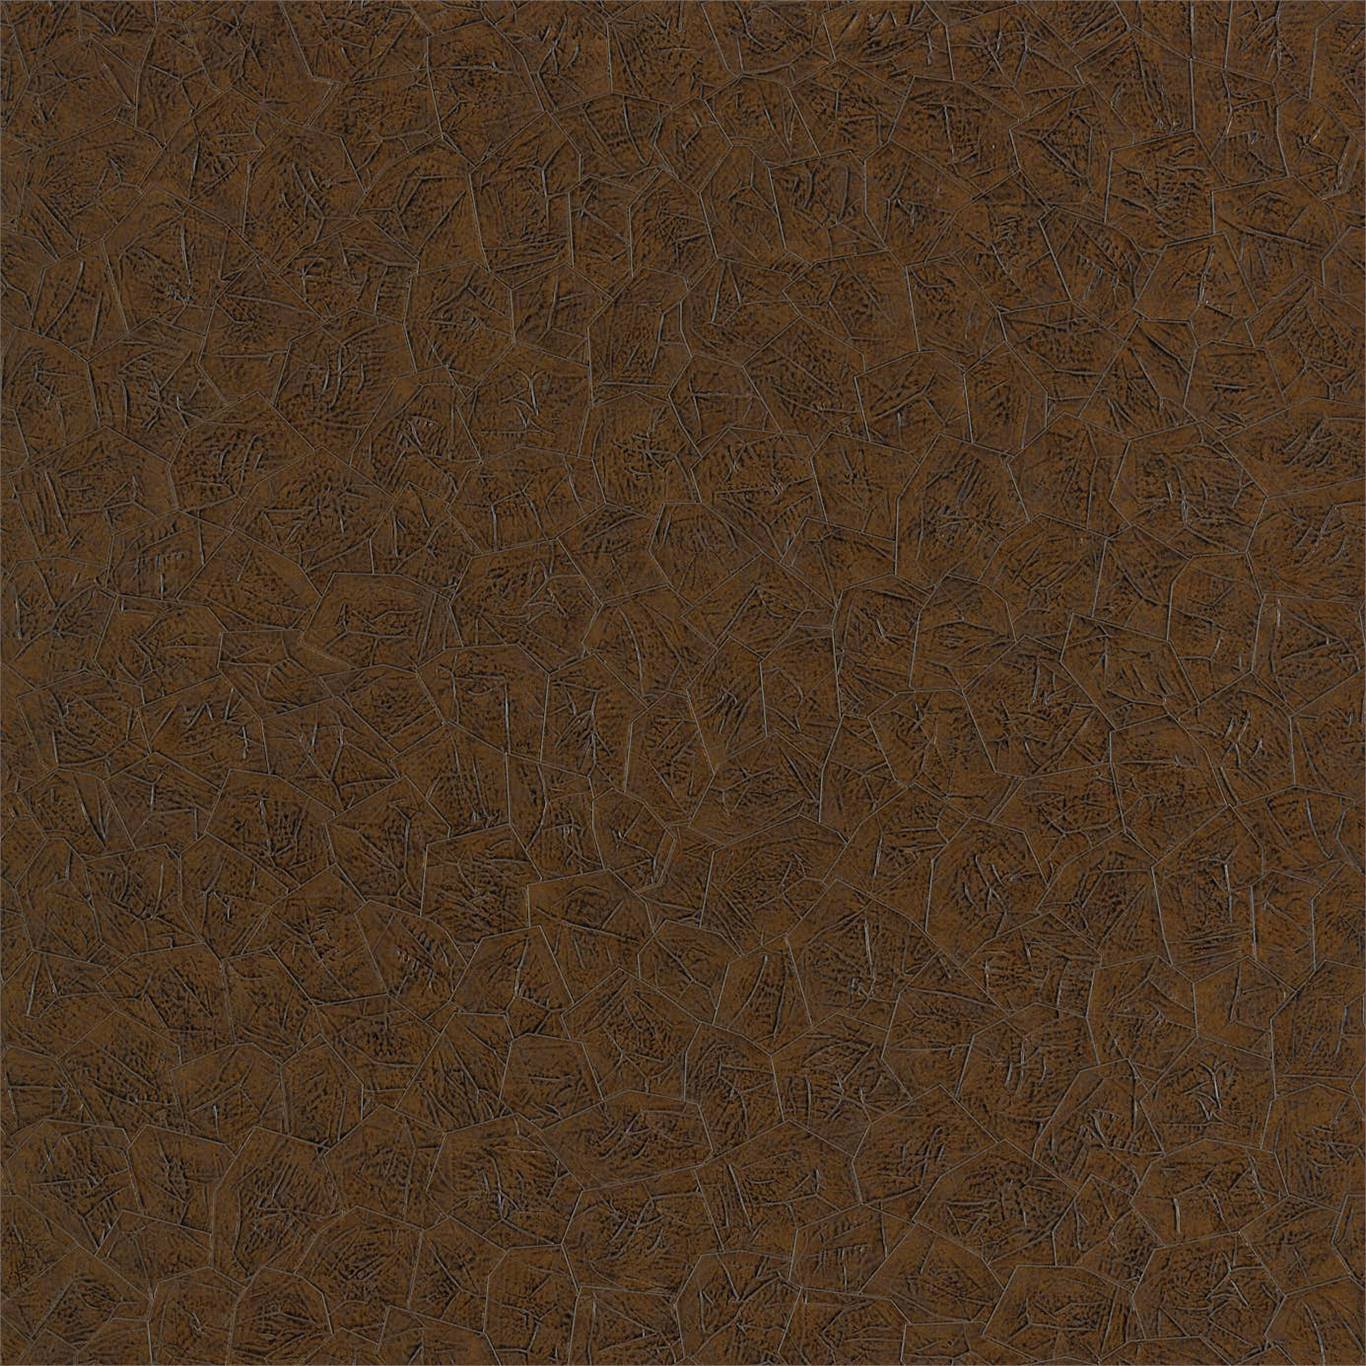 Kimberlite Copper Oxide Wallpaper EANW112569 by Harlequin